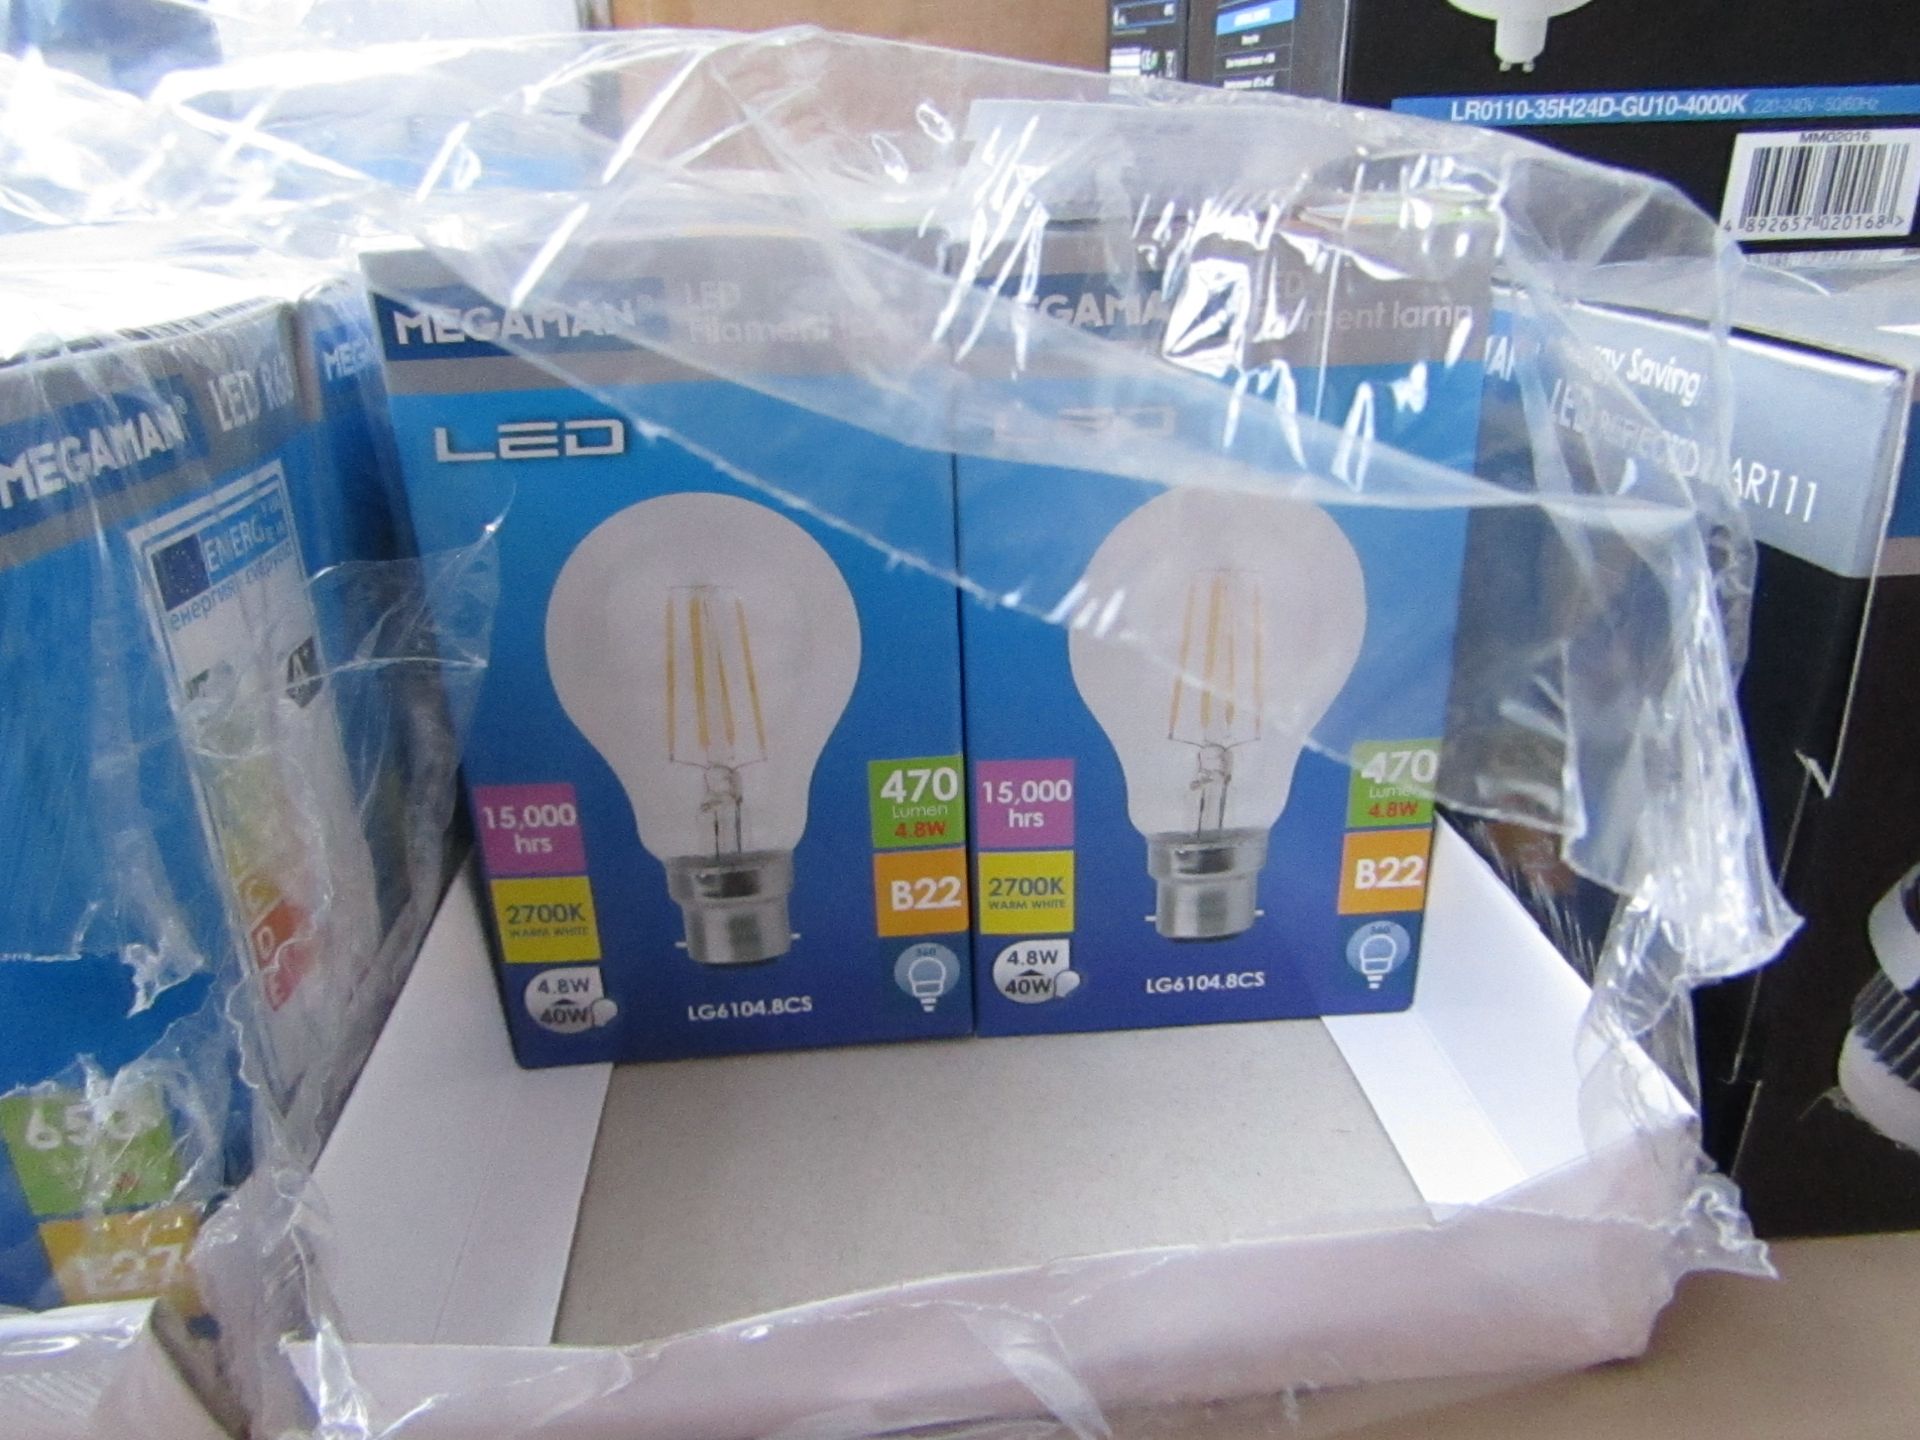 1x Megaman LED Filament bulb, new and boxed. 15,000Hrs / B22 / 470 Lumens